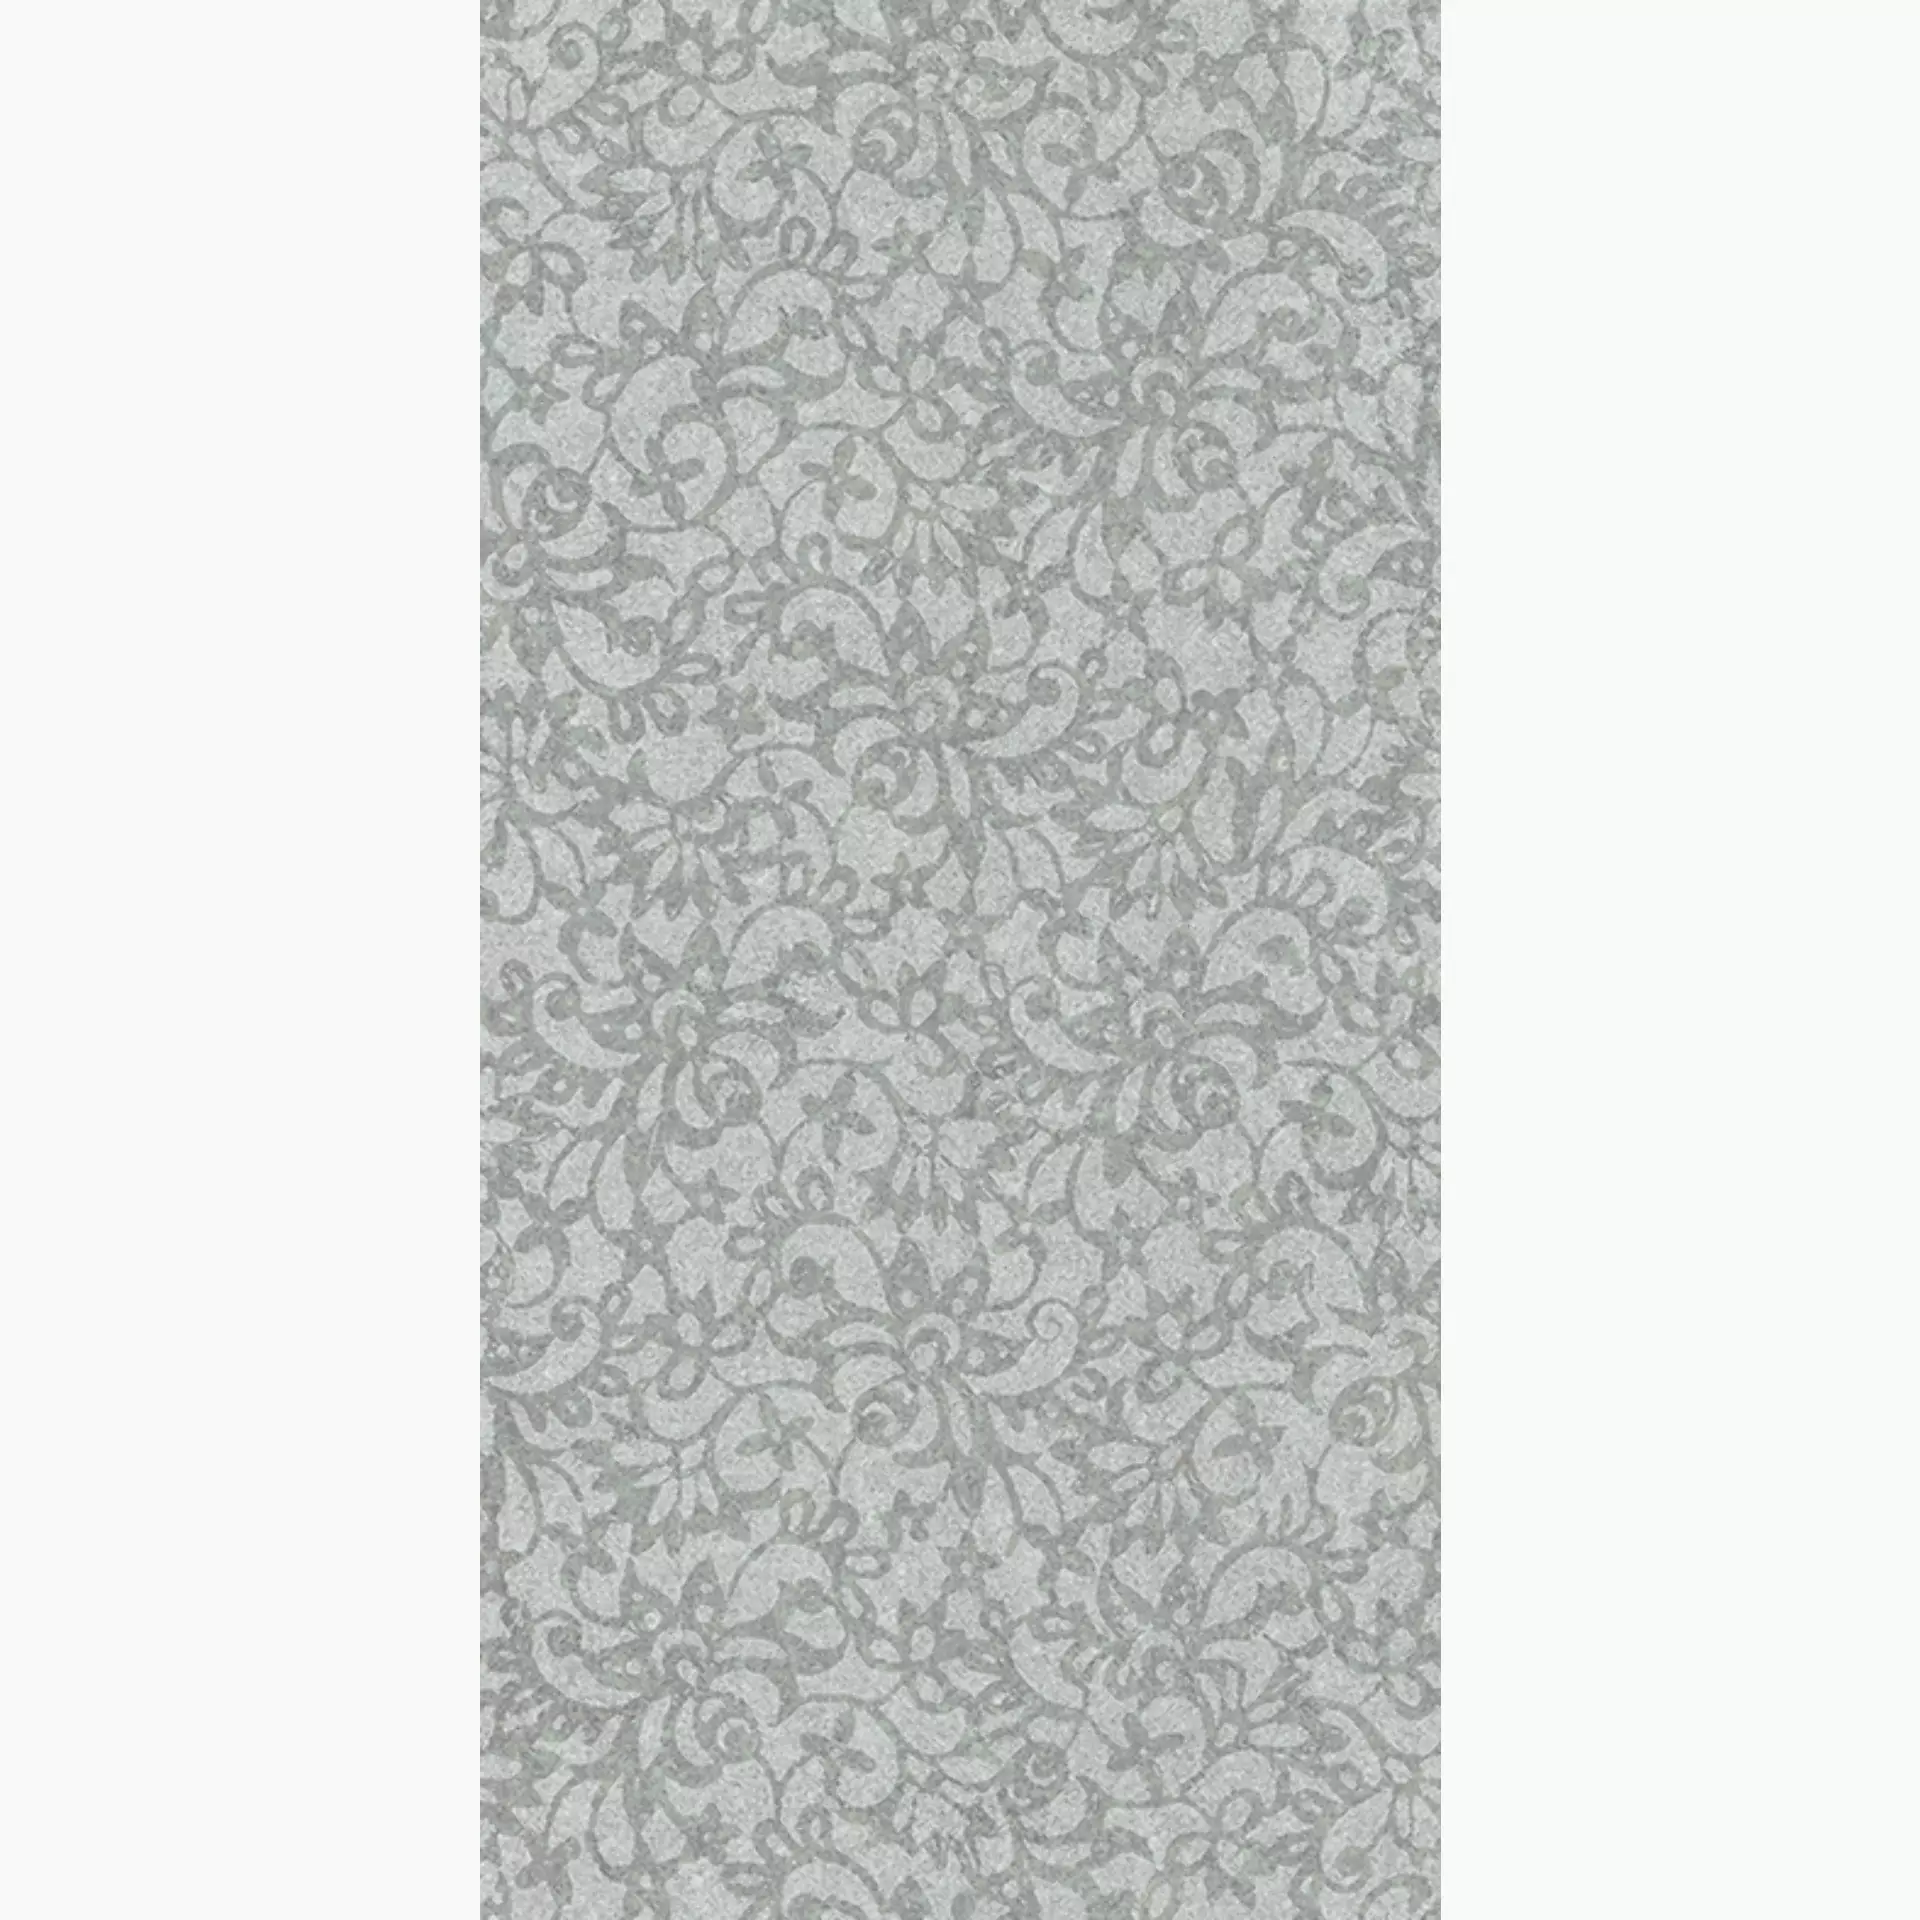 Viva Heritage Grey Naturale Grey EGN3 natur 40x80cm Dekor Florita rektifiziert 9,5mm